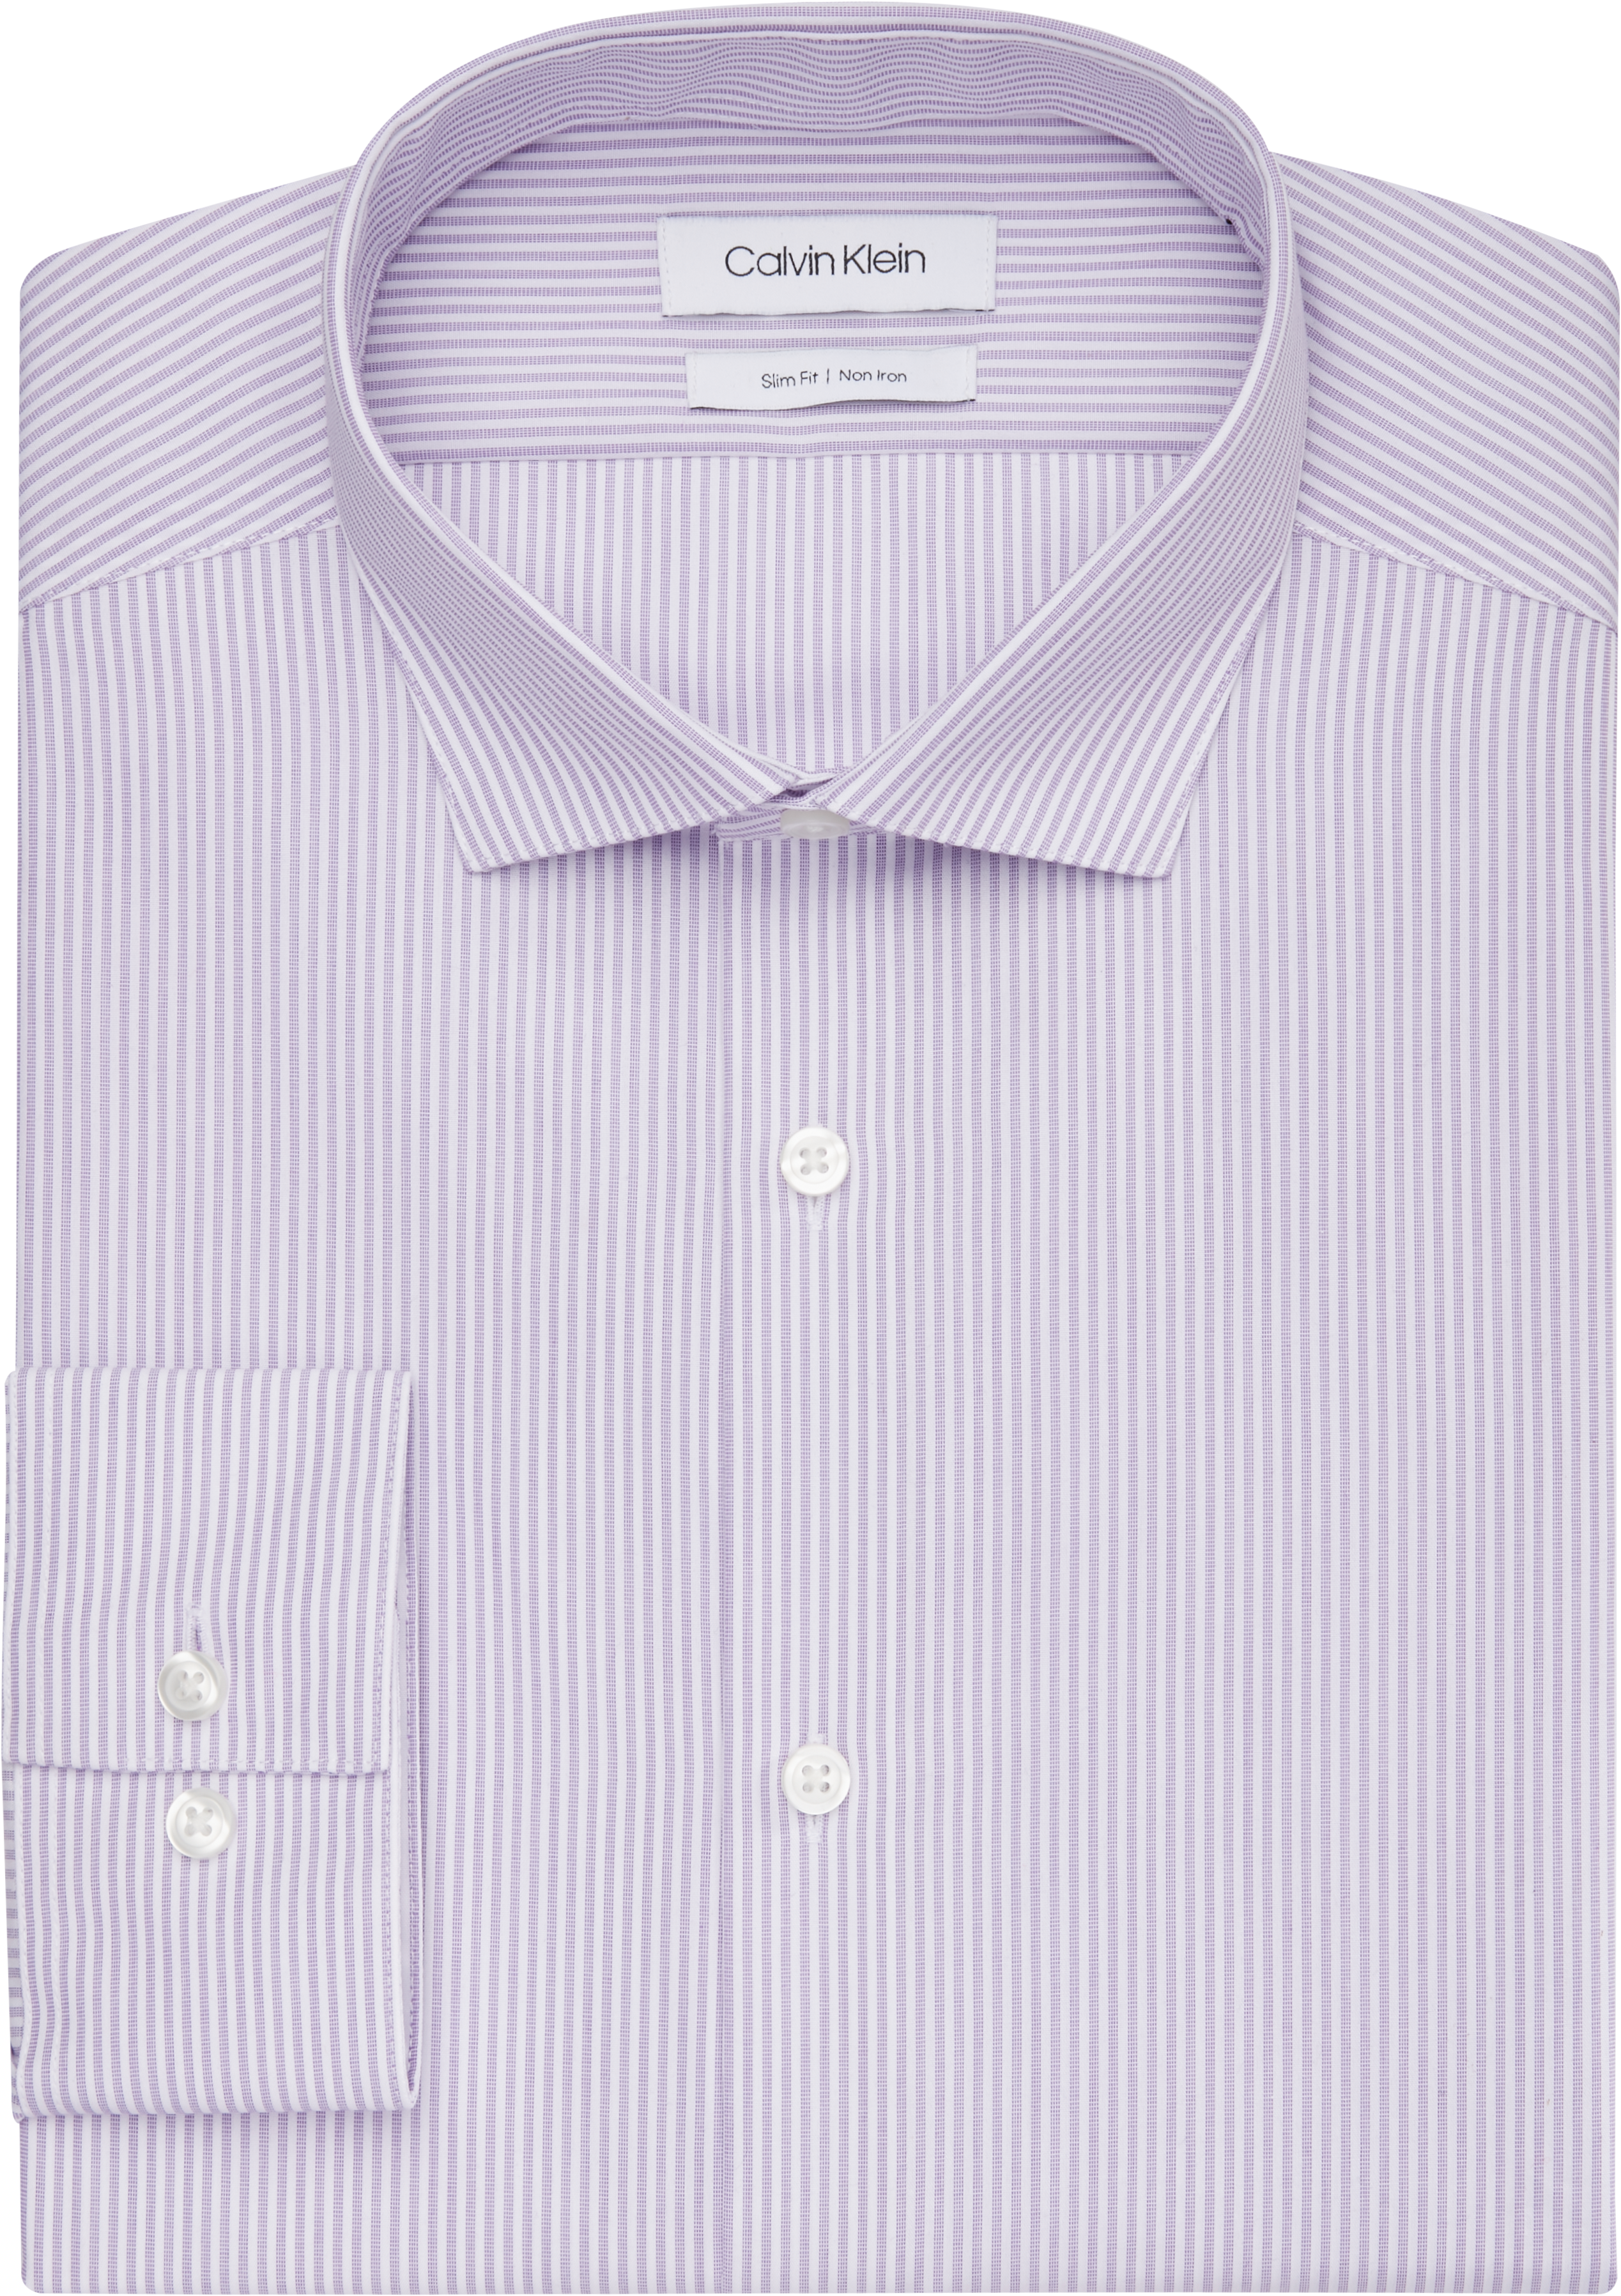 Calvin Klein Wisteria Lavender Stripe Slim Fit Dress Shirt - Men's Sale ...